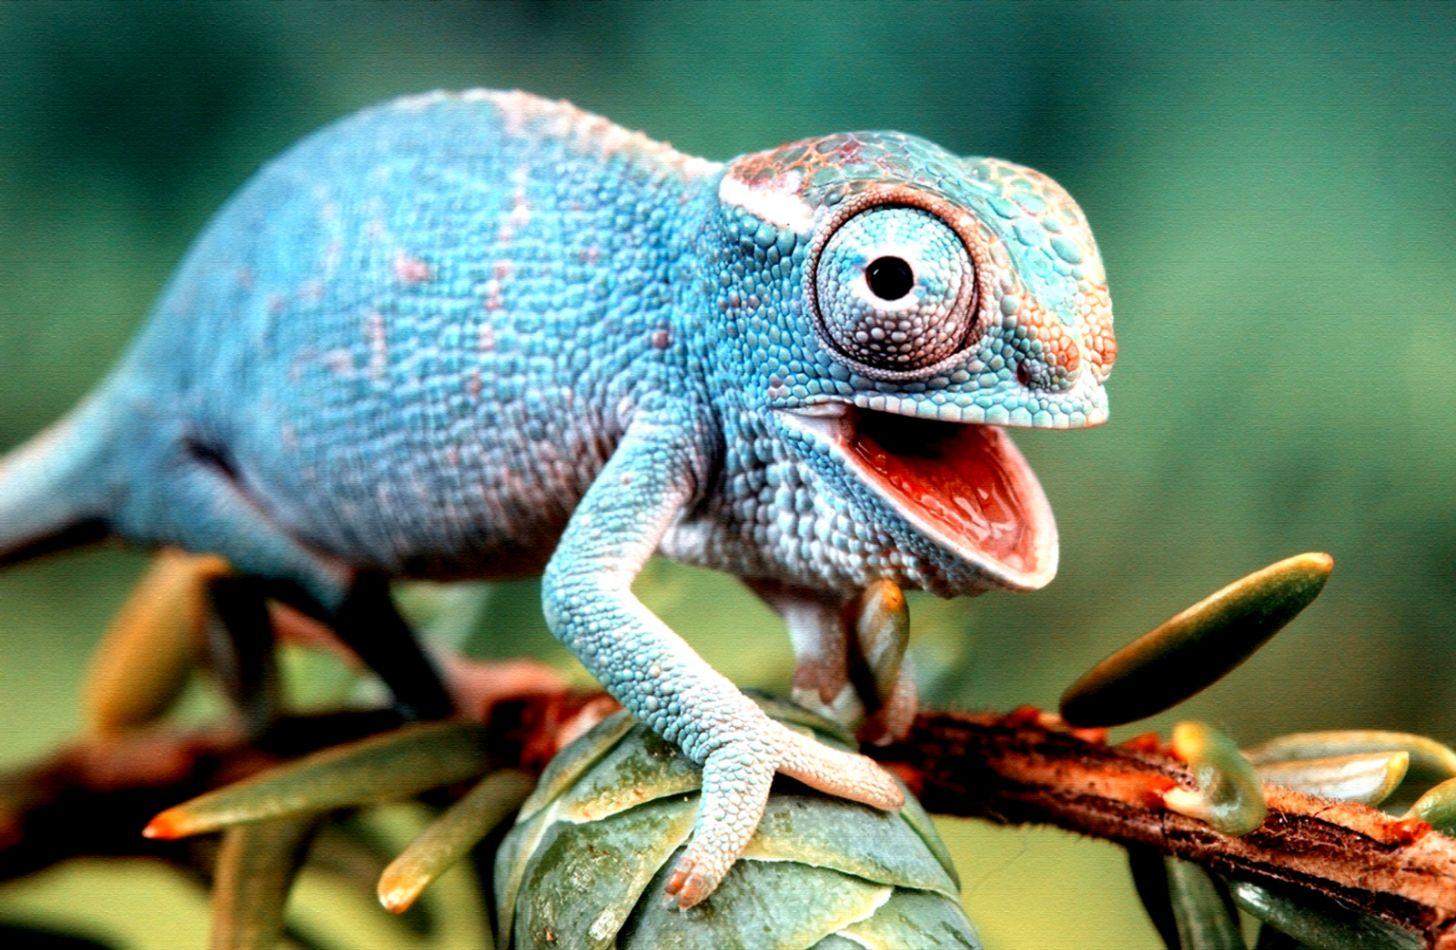 Colorful Lizard Wallpaper